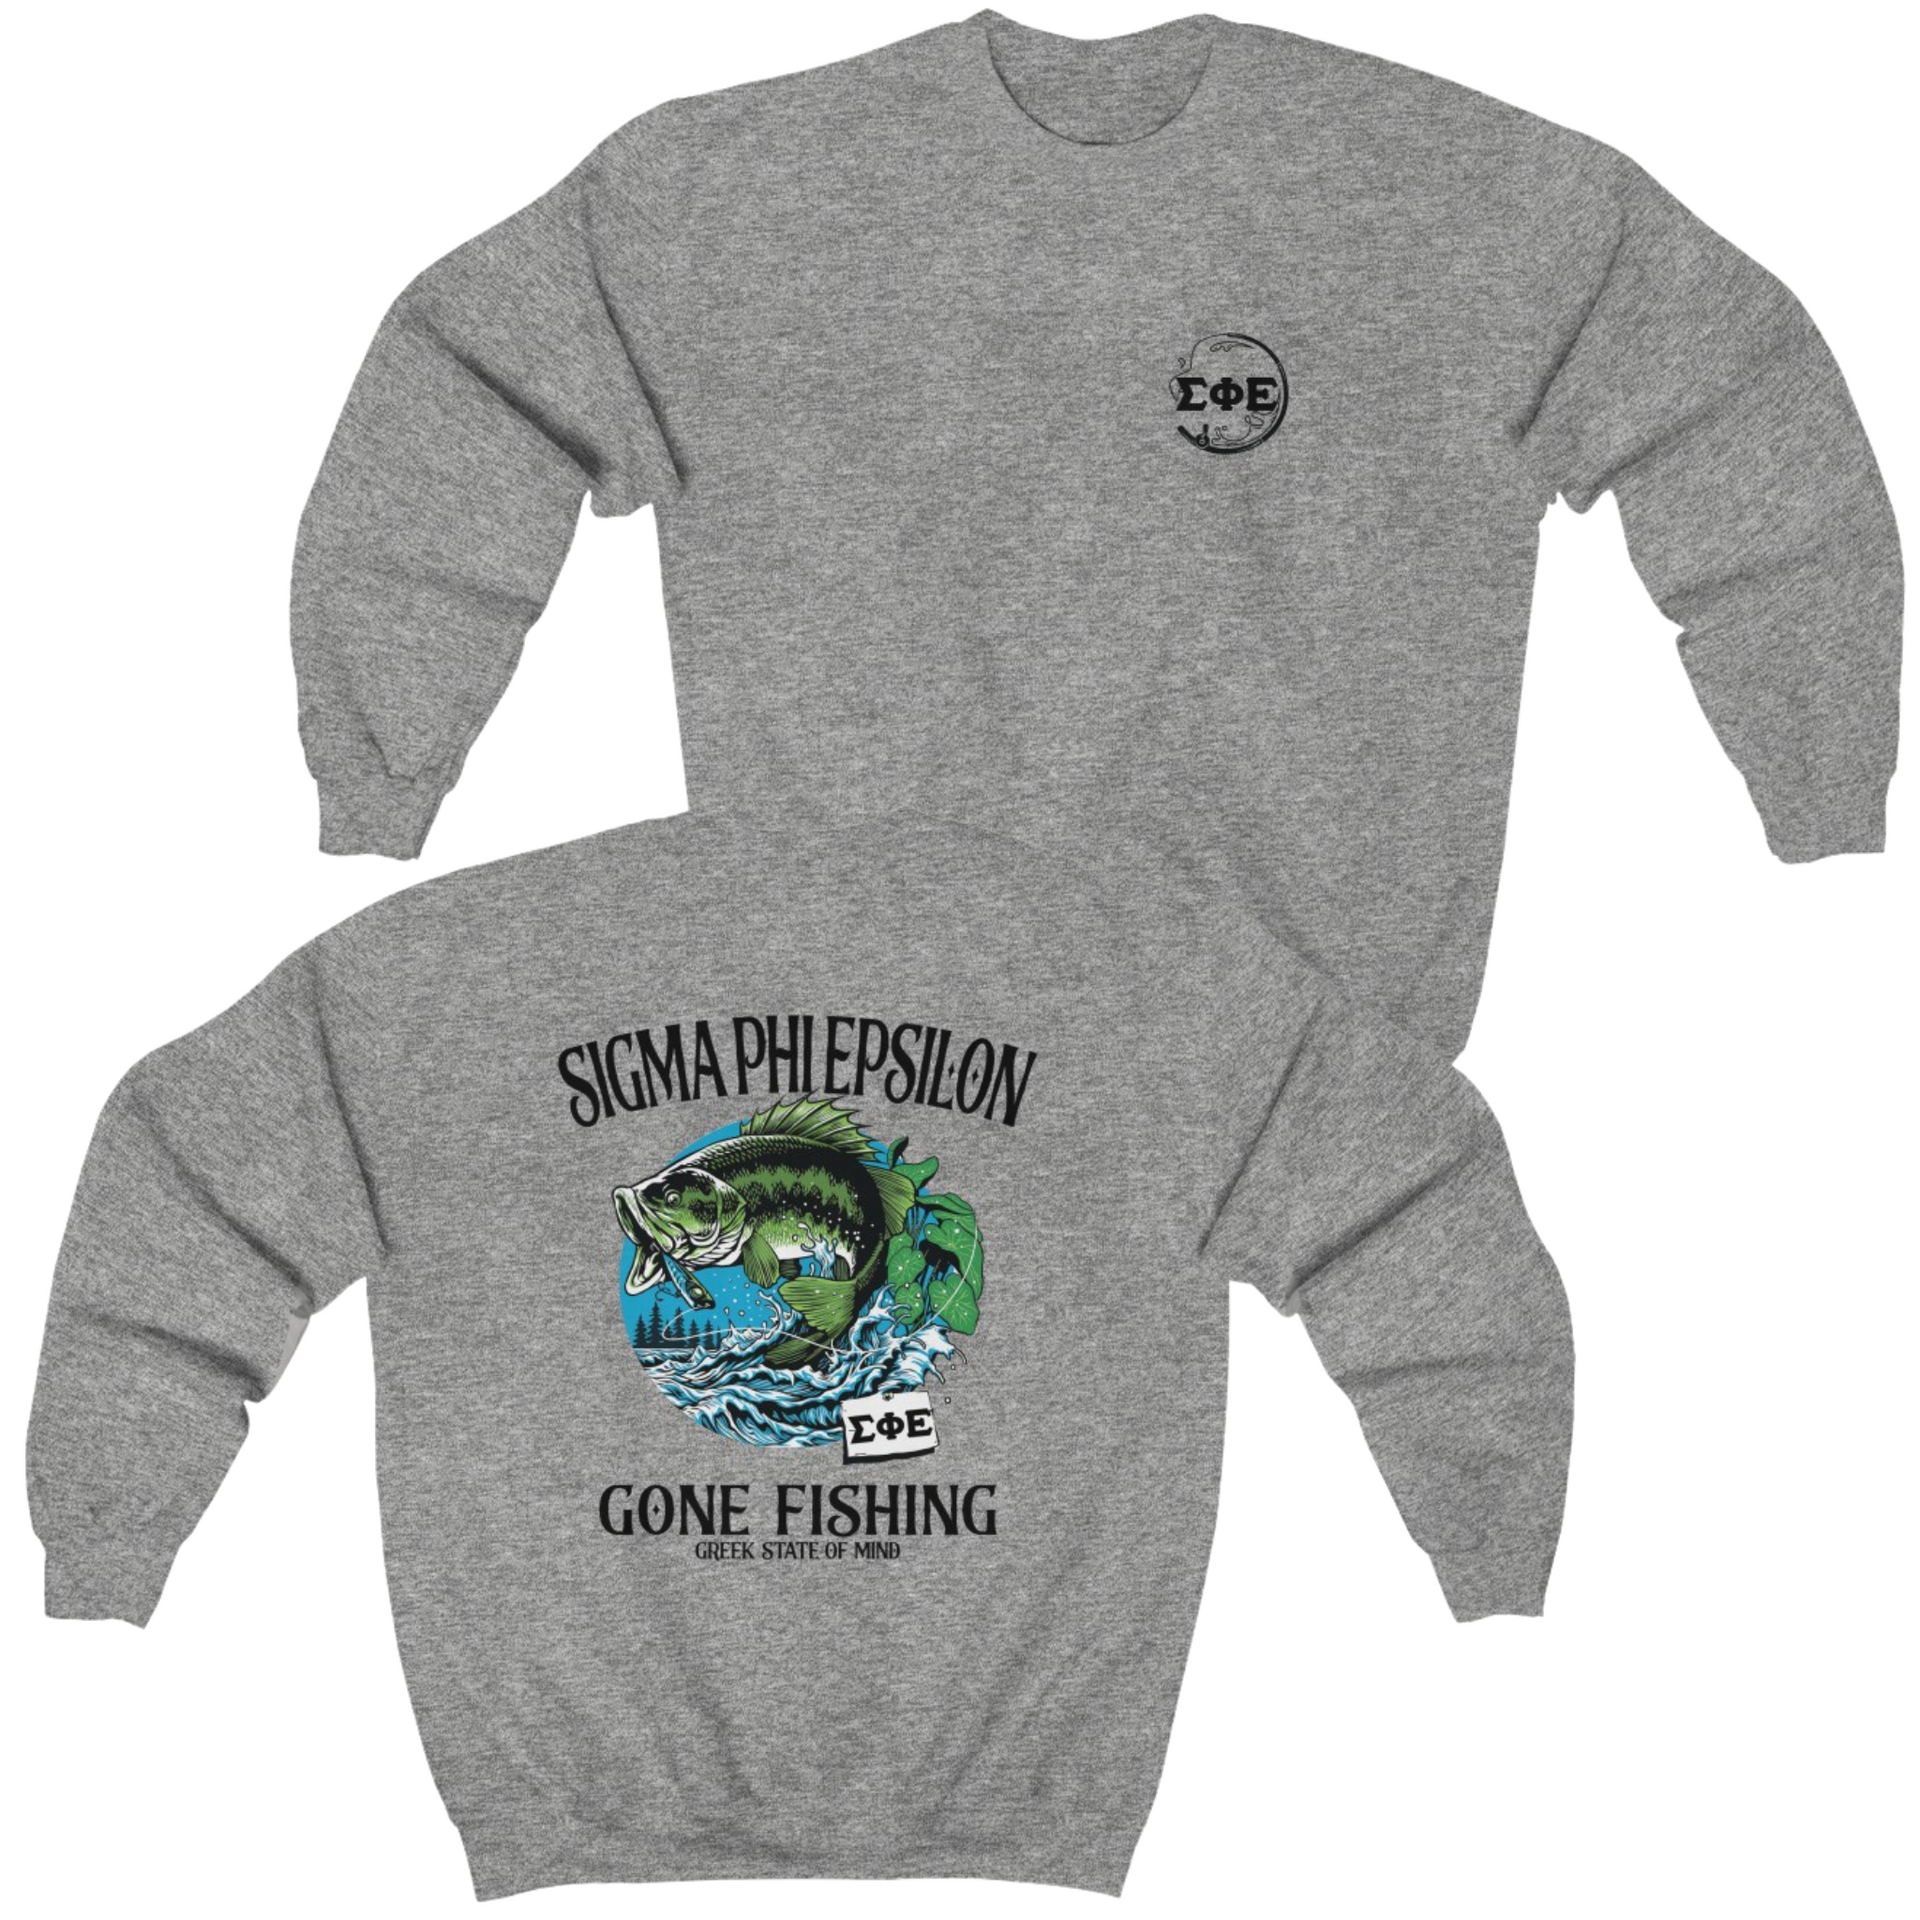 Grey Sigma Phi Epsilon Graphic Crewneck Sweatshirt | Gone Fishing | SigEp Clothing - Campus Apparel 